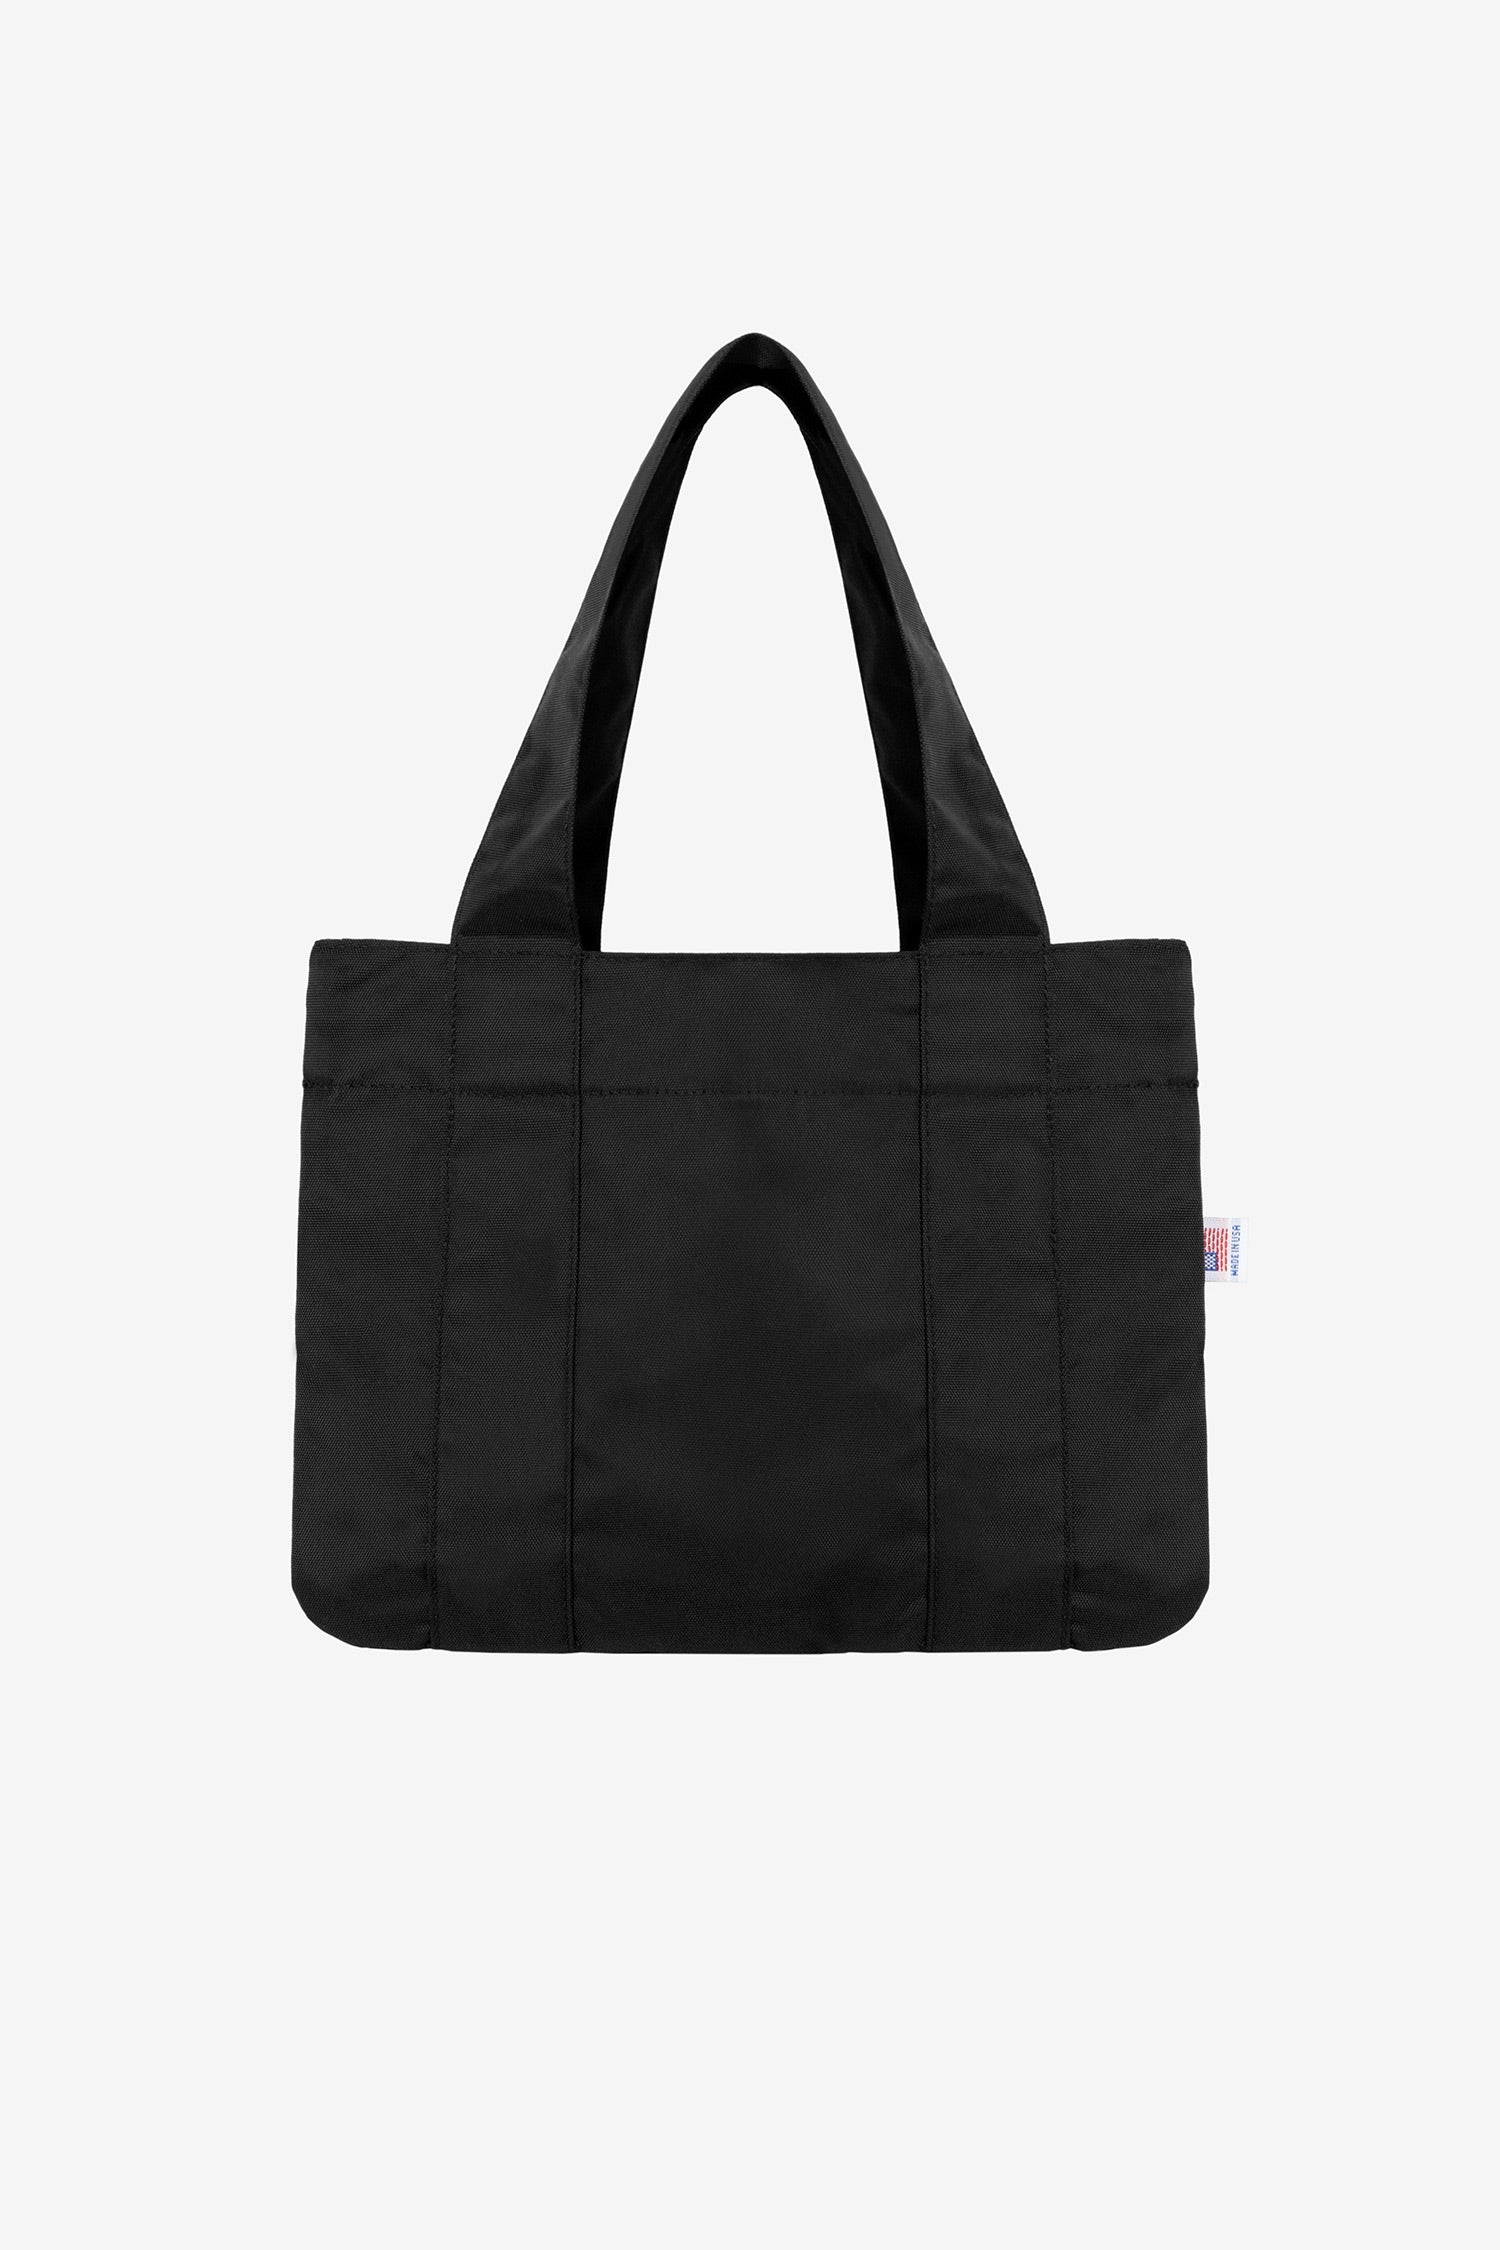 Rive Gauche Small canvas tote bag in black - Saint Laurent